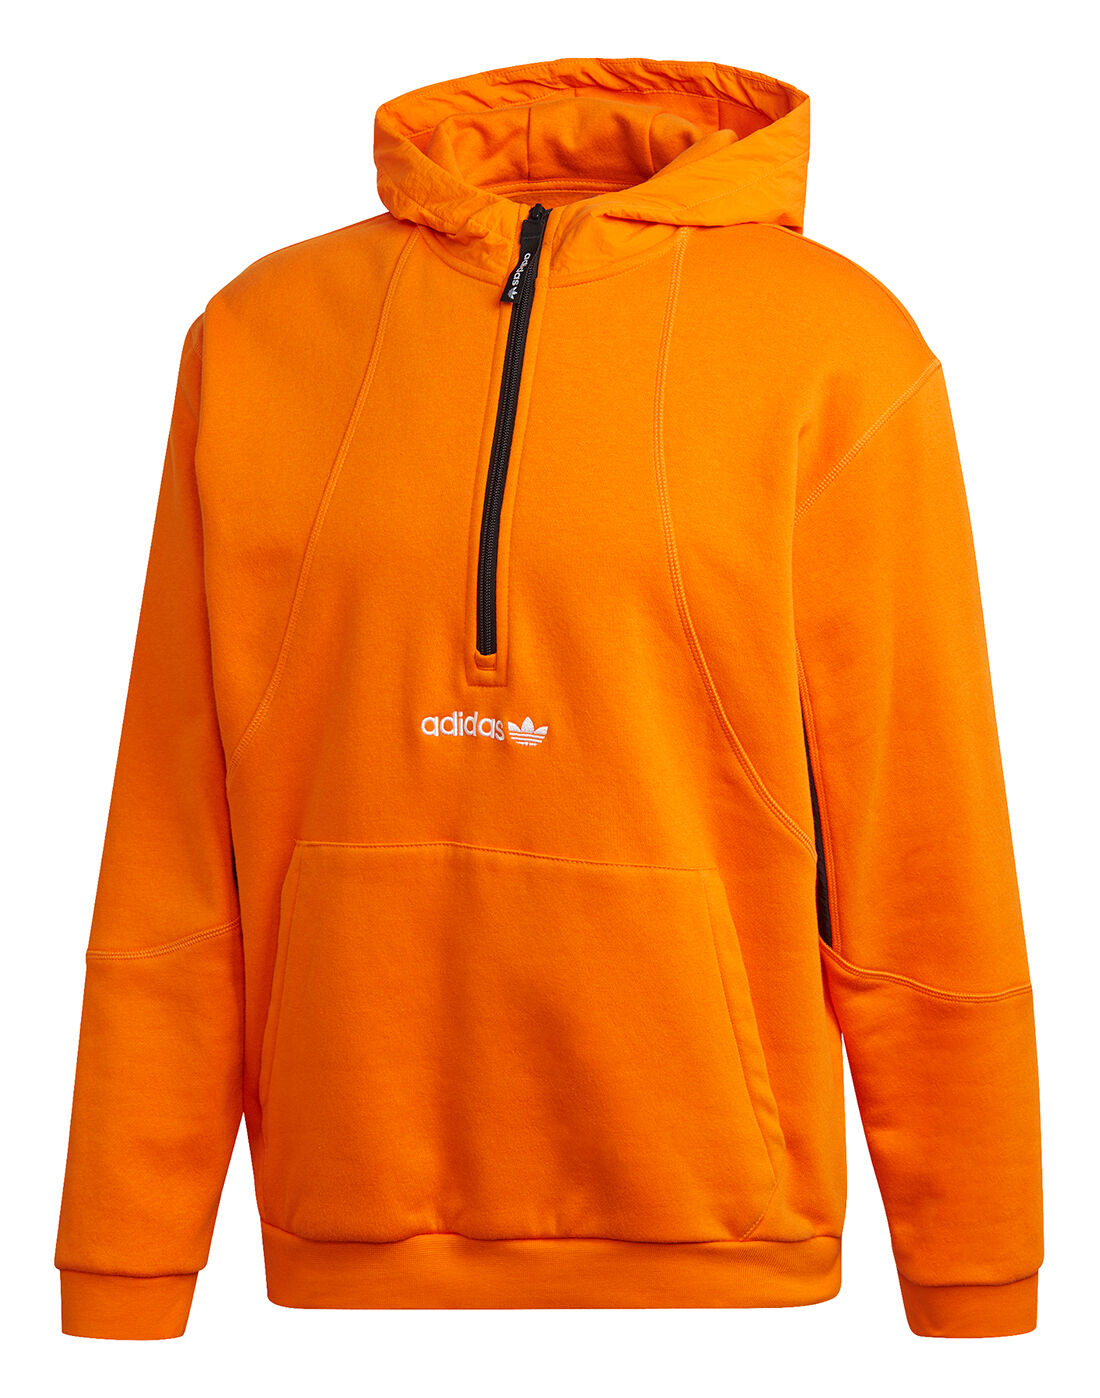 adidas hoodie orange